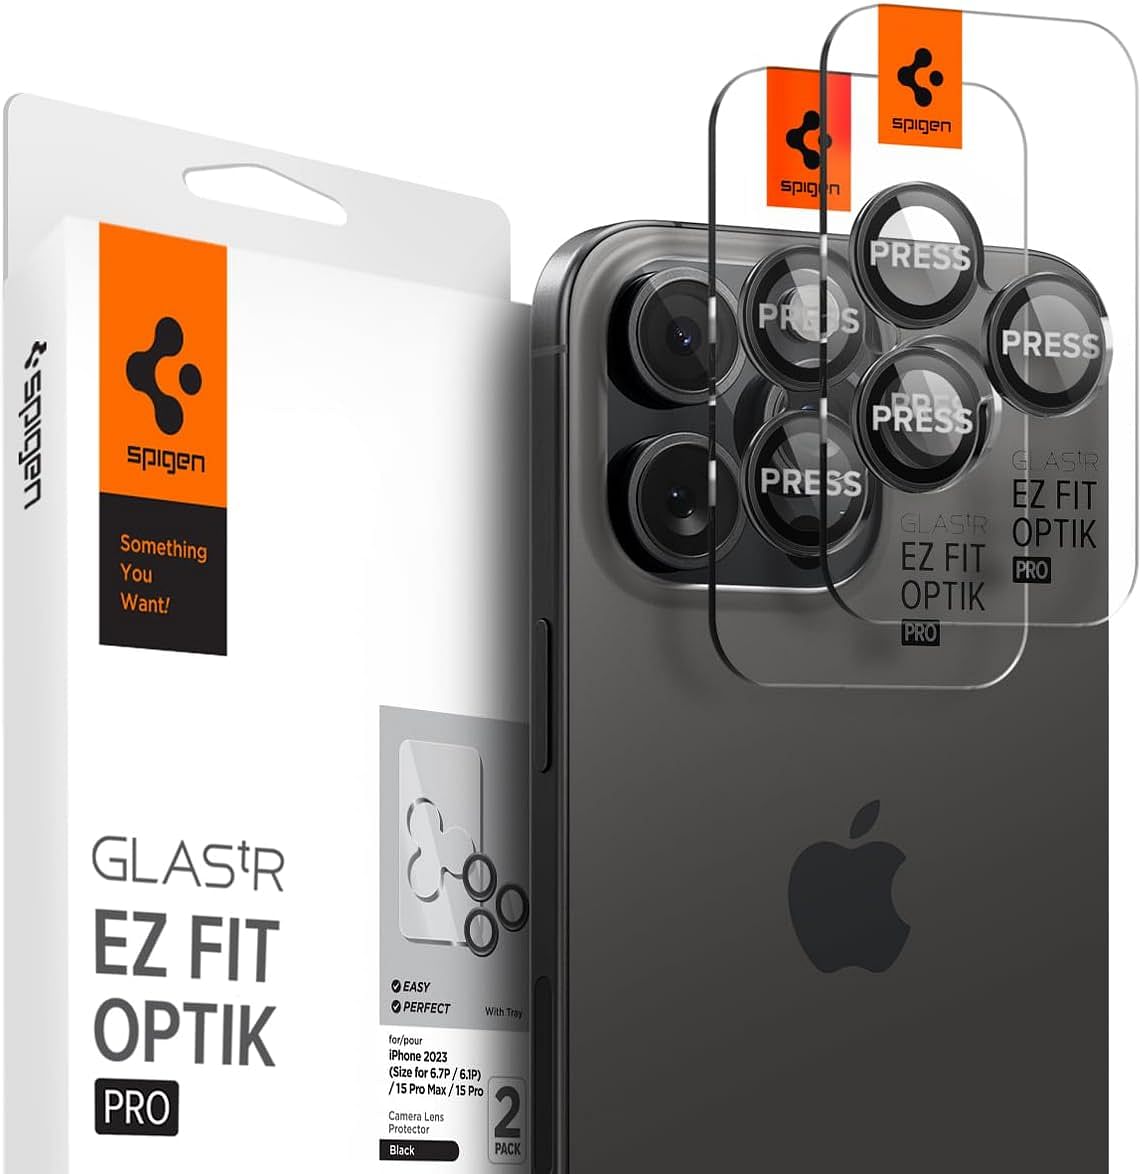 Spigen GLAStR EZ-Fit Optik PRO Camera Lens Screen Protector designed for iPhone 14 PRO and iPhone 14 Pro MAX (2022) - Black [2 Pack]